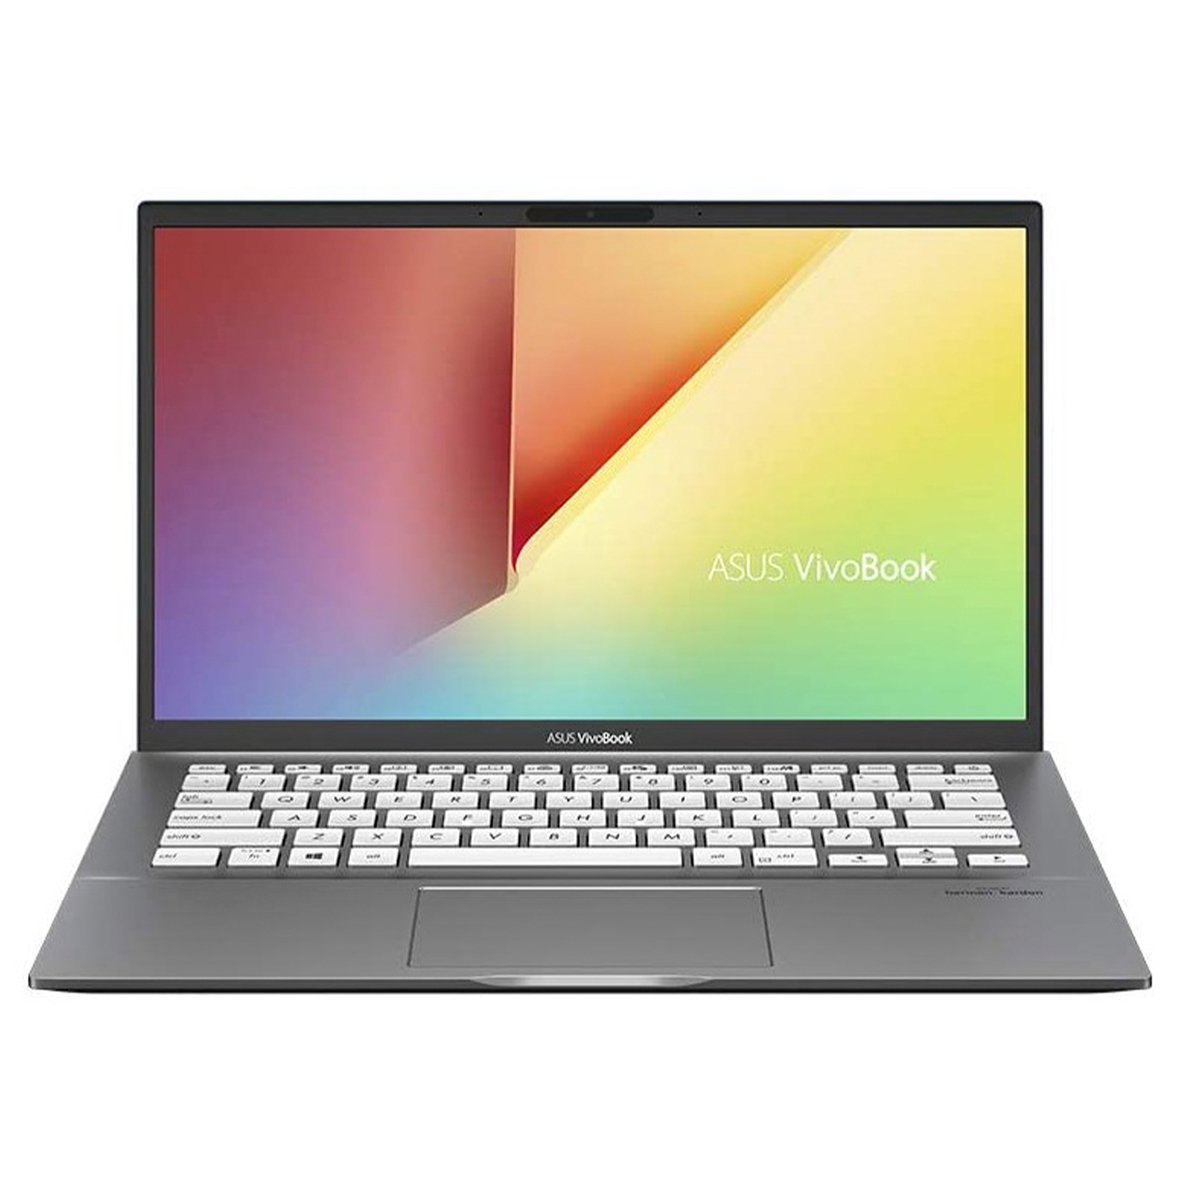 ASUS VivoBook S431Fl-Am002T Laptop,Core i7-8565U,16GB,512GB SSD,NVIDIA GeForce MX250 2GB,14 inches FHD,Windows 10,Gun Metal Grey